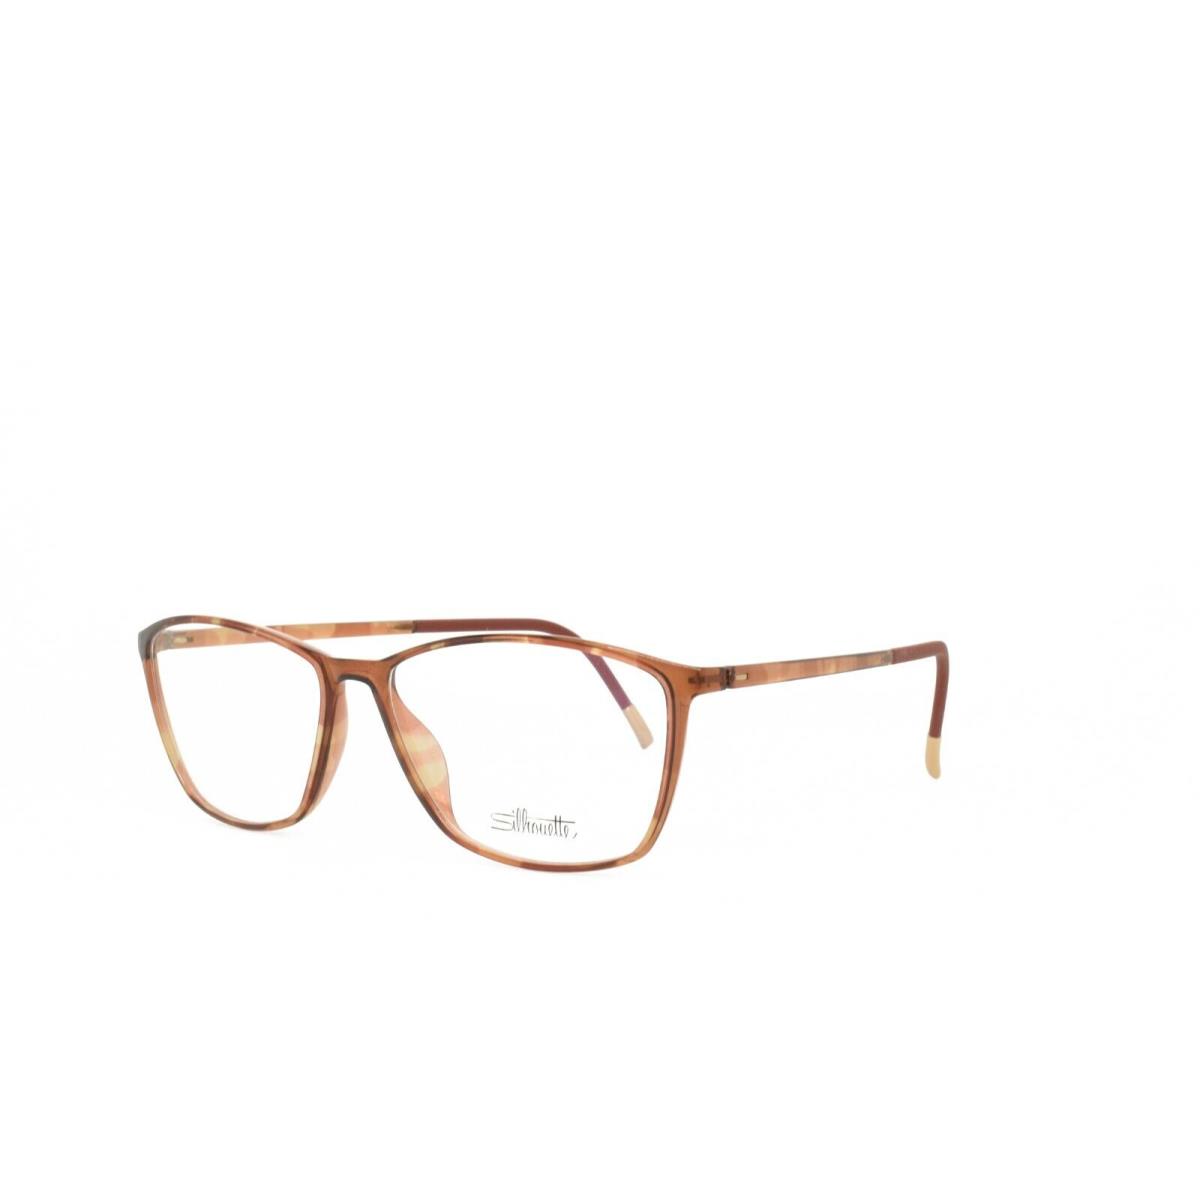 Silhouette Spx Illusion 1560 20 6111 Eyeglasses Frame 54-14-135 Brown